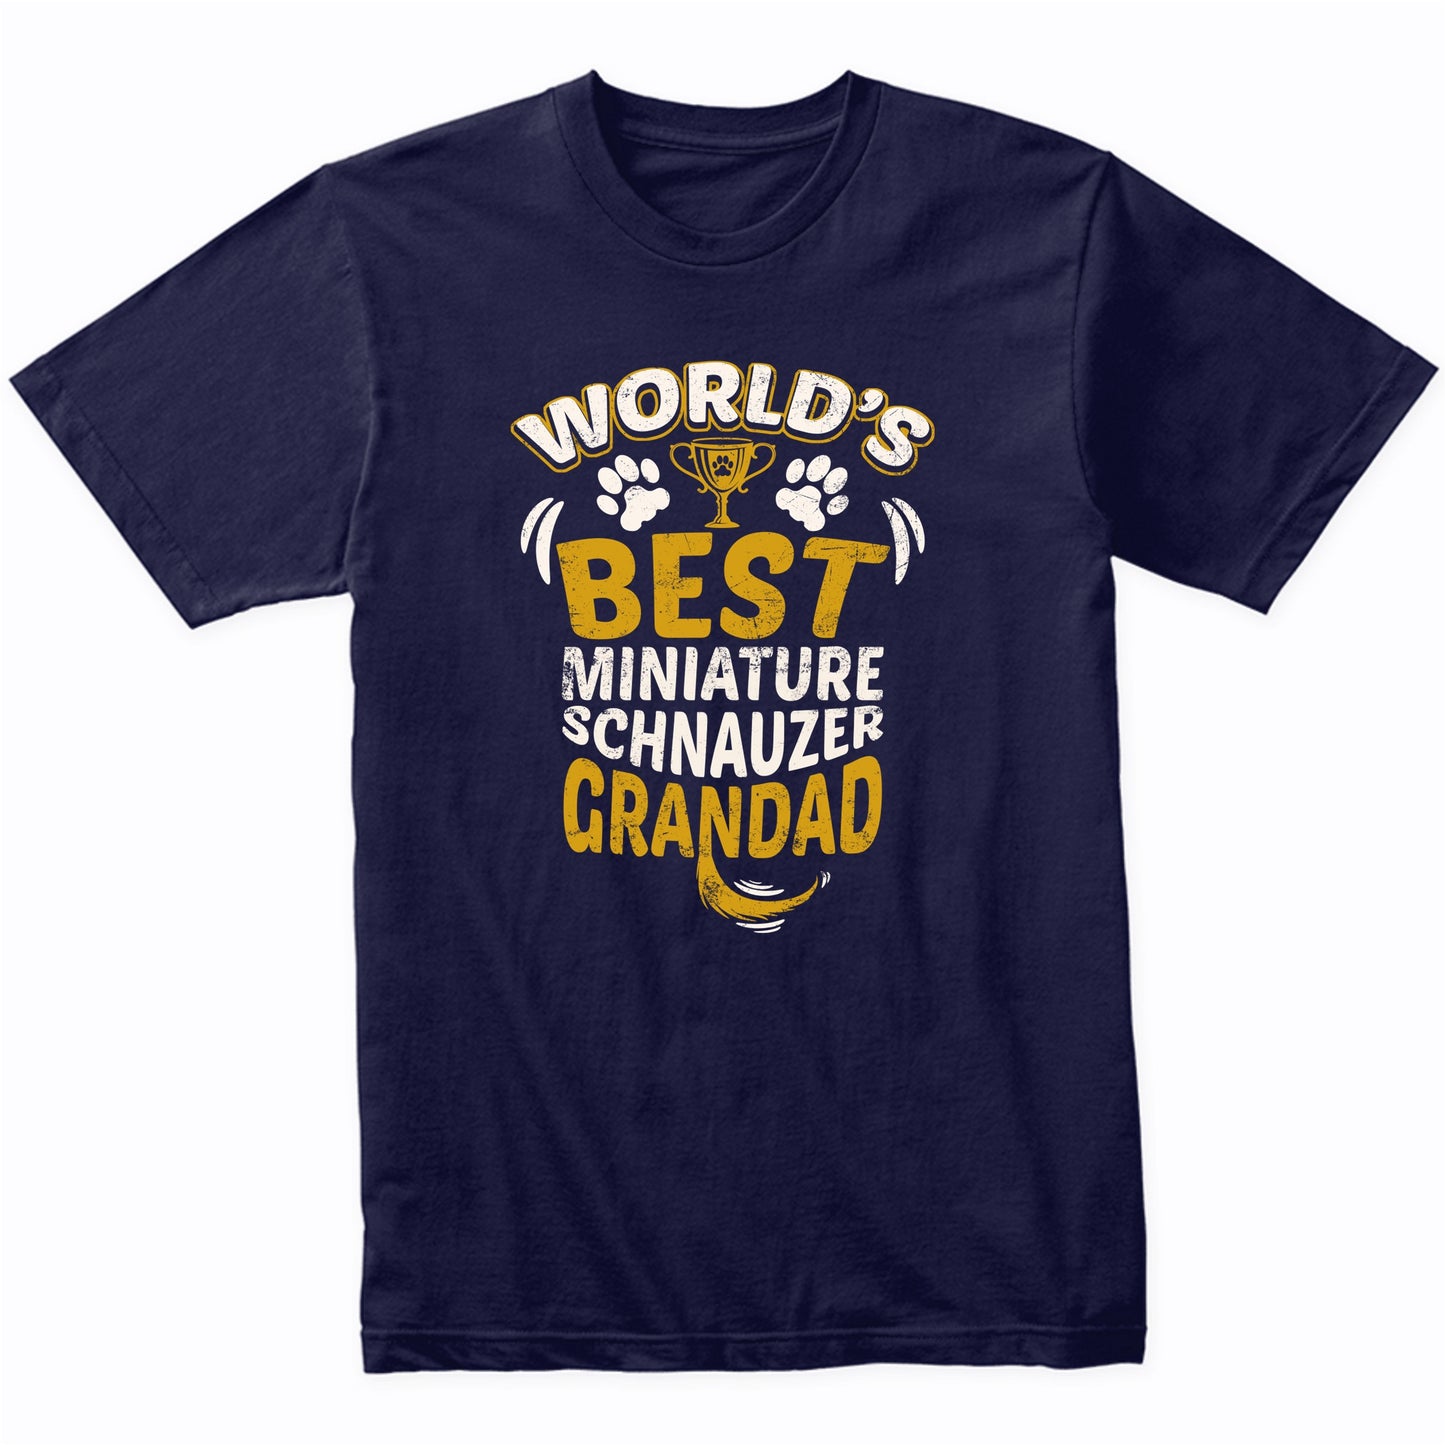 World's Best Miniature Schnauzer Grandad Graphic T-Shirt